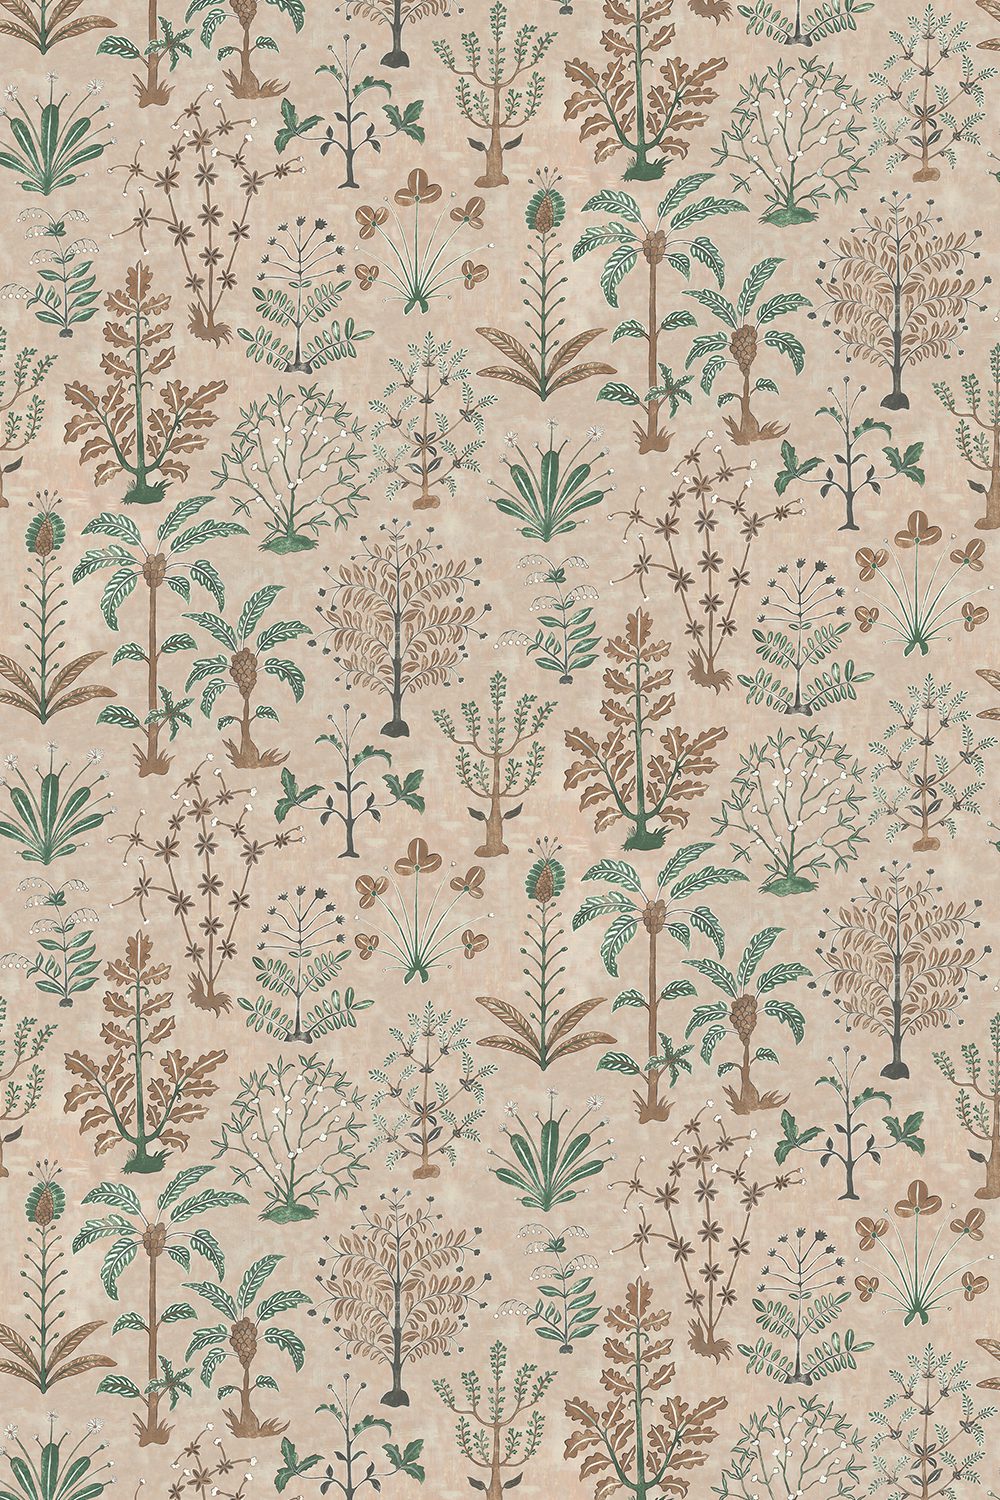 Josephine-munsey-wallpaper-cynthia-tree-soft-design-plaster-pink-teal-green-nature-inspired-design